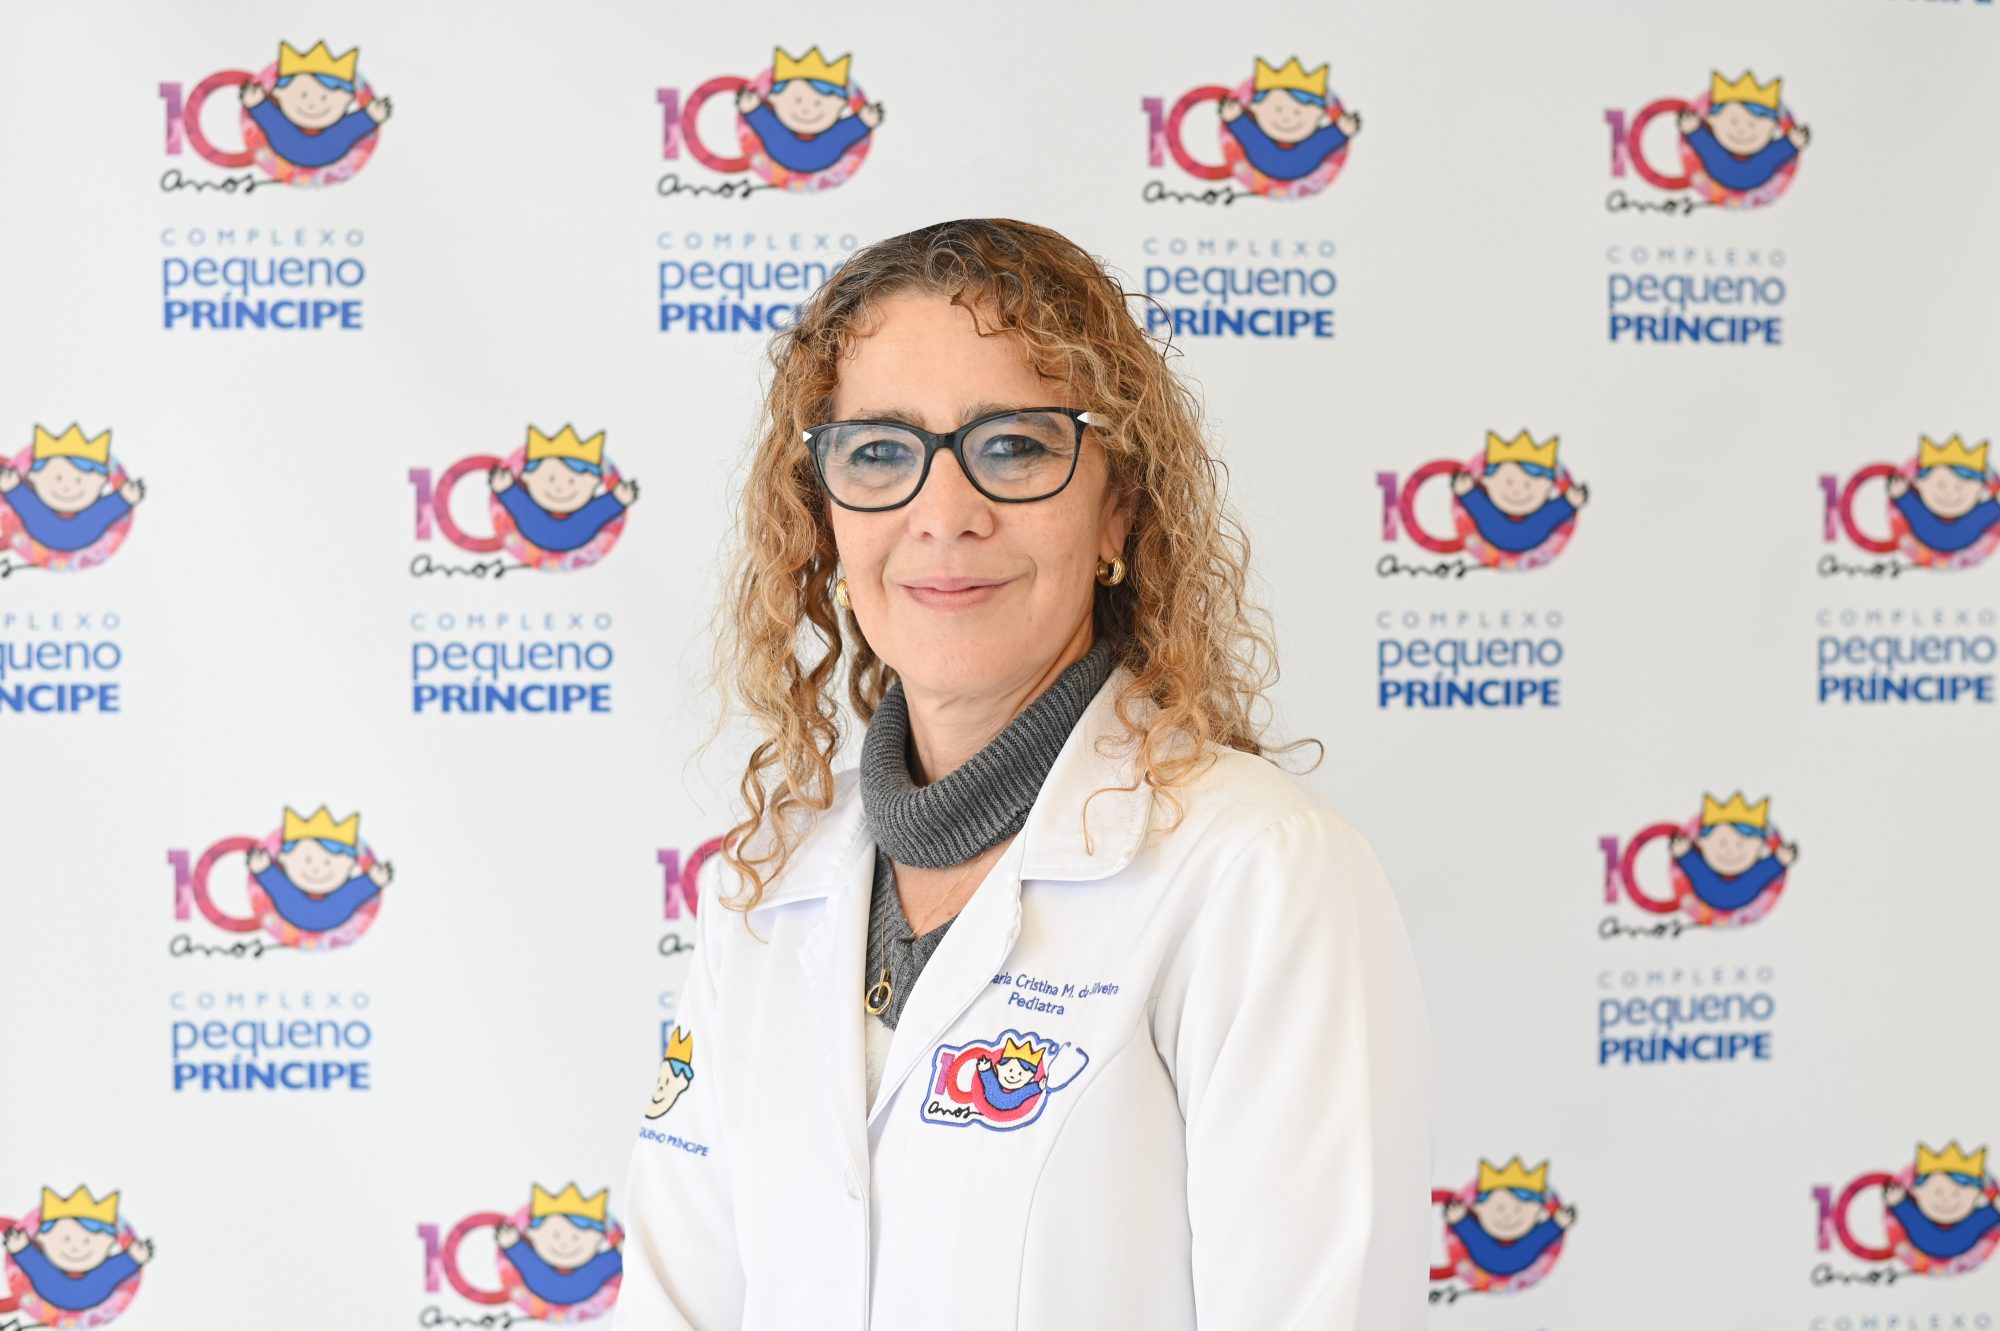 Dra. Maria Cristina da Silveira